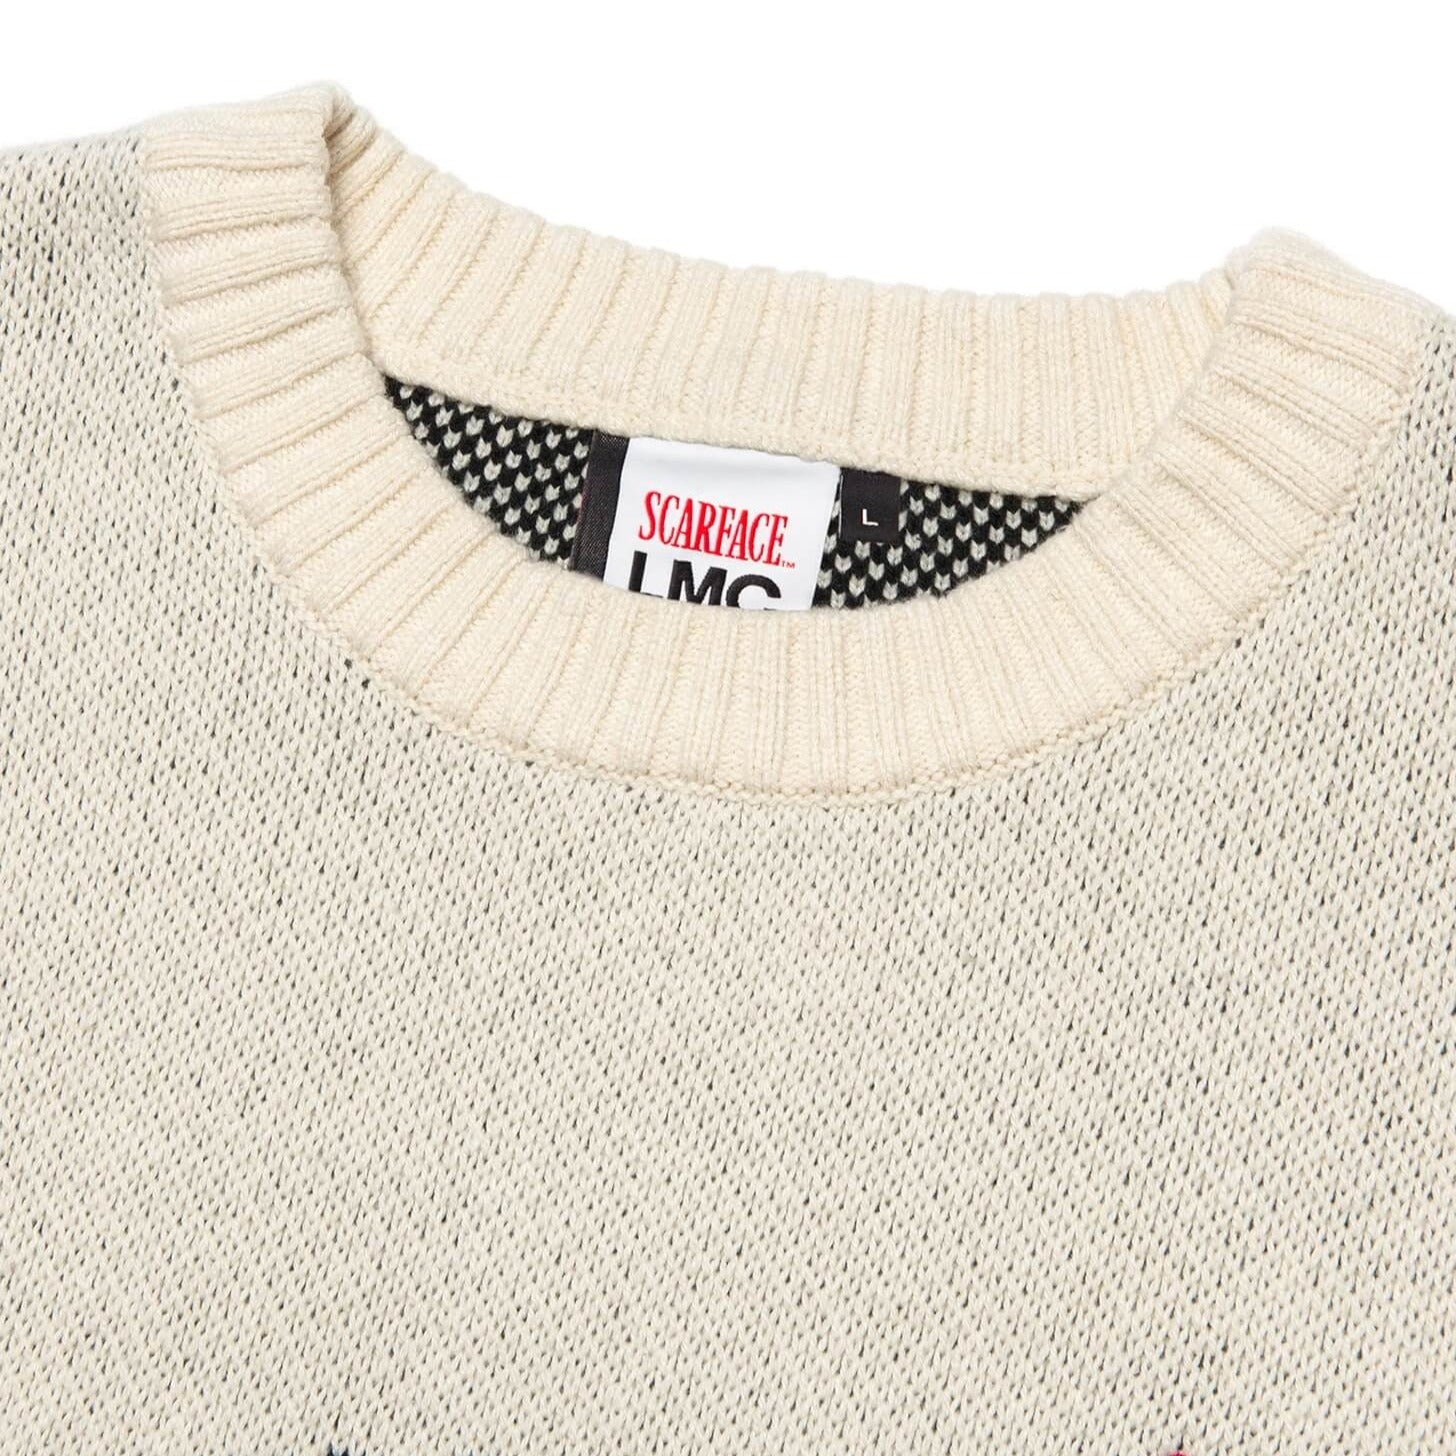 itGirl Shop - Scarface Mafia 90s Aesthetic Knit White Sweater